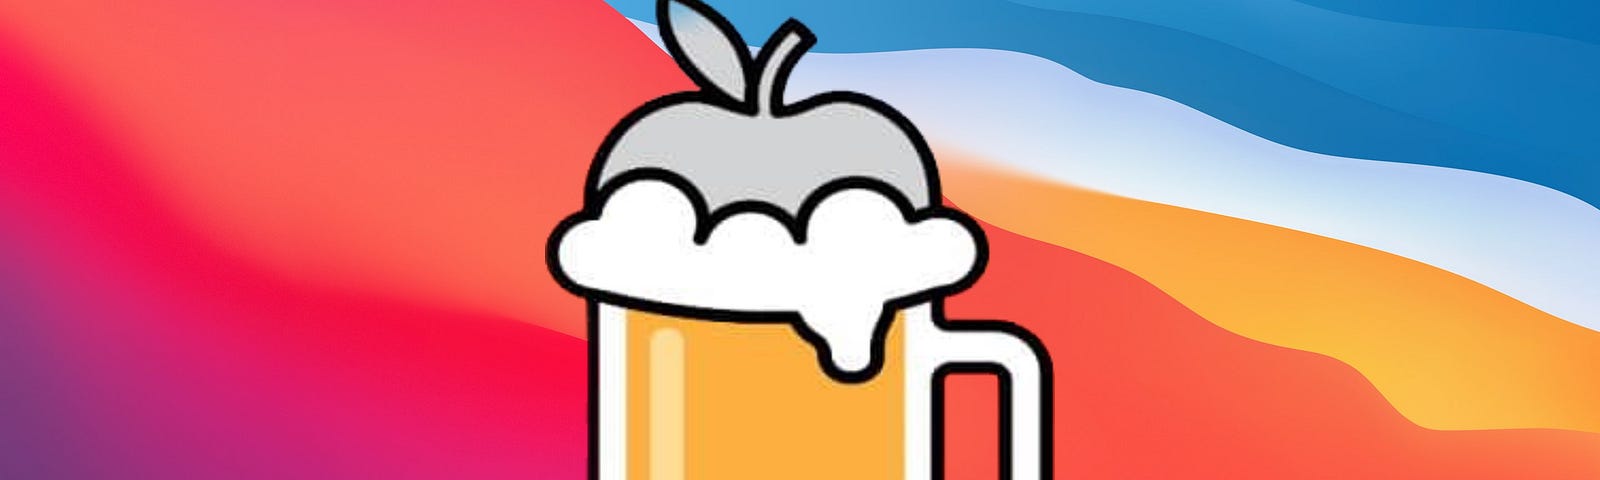 HomeBrew logo on macOS desktop